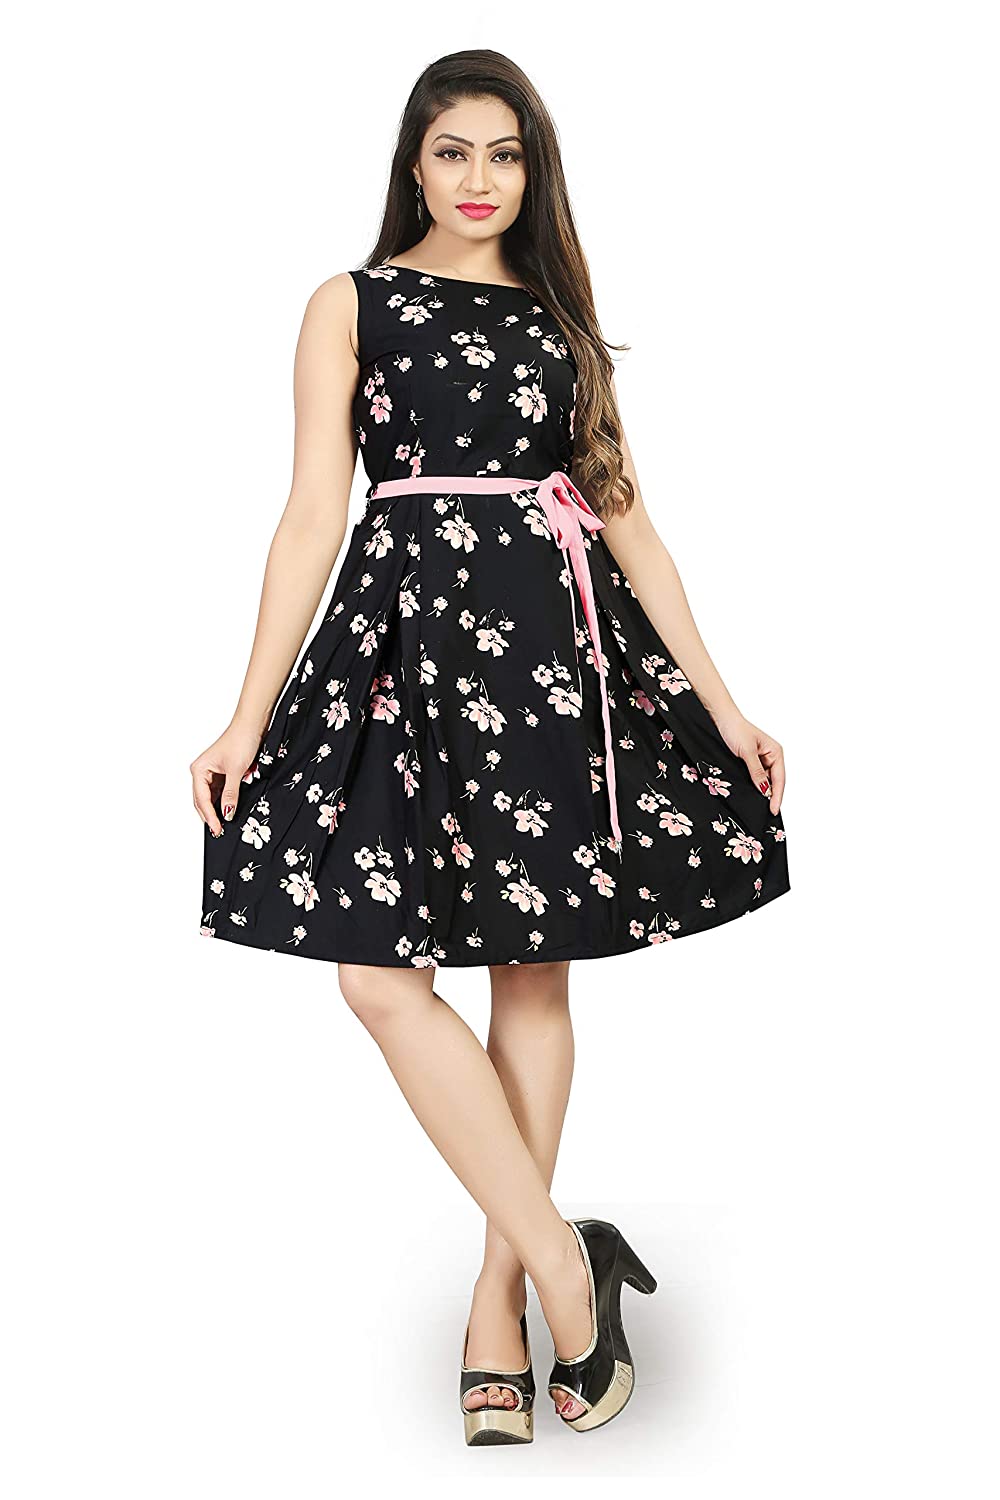 Beautiful Western Black Color Flower Print Top Dress